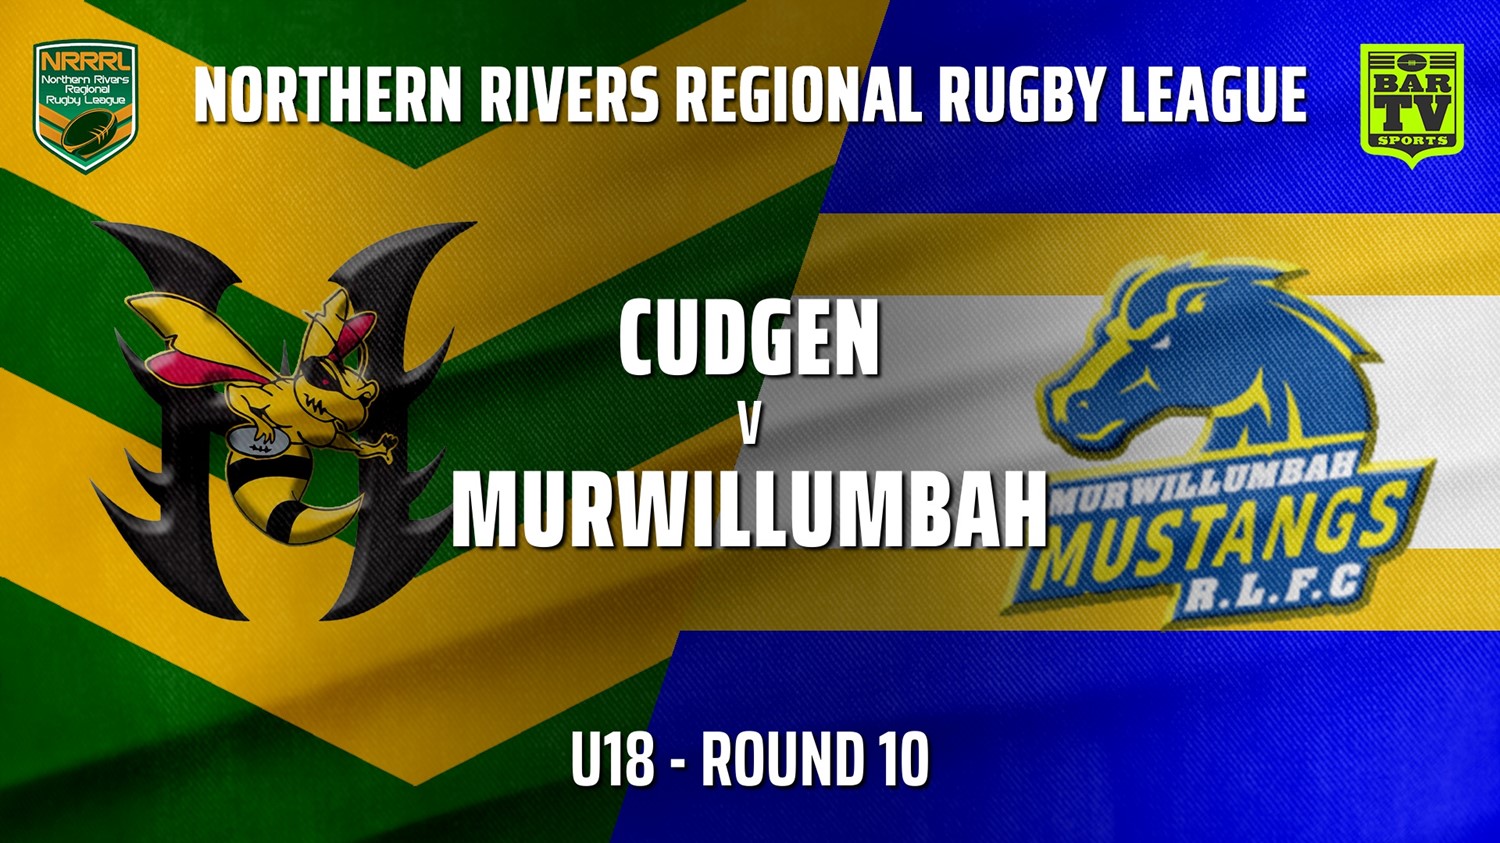 210711-Northern Rivers Round 10 - U18 - Cudgen Hornets v Murwillumbah Mustangs Slate Image